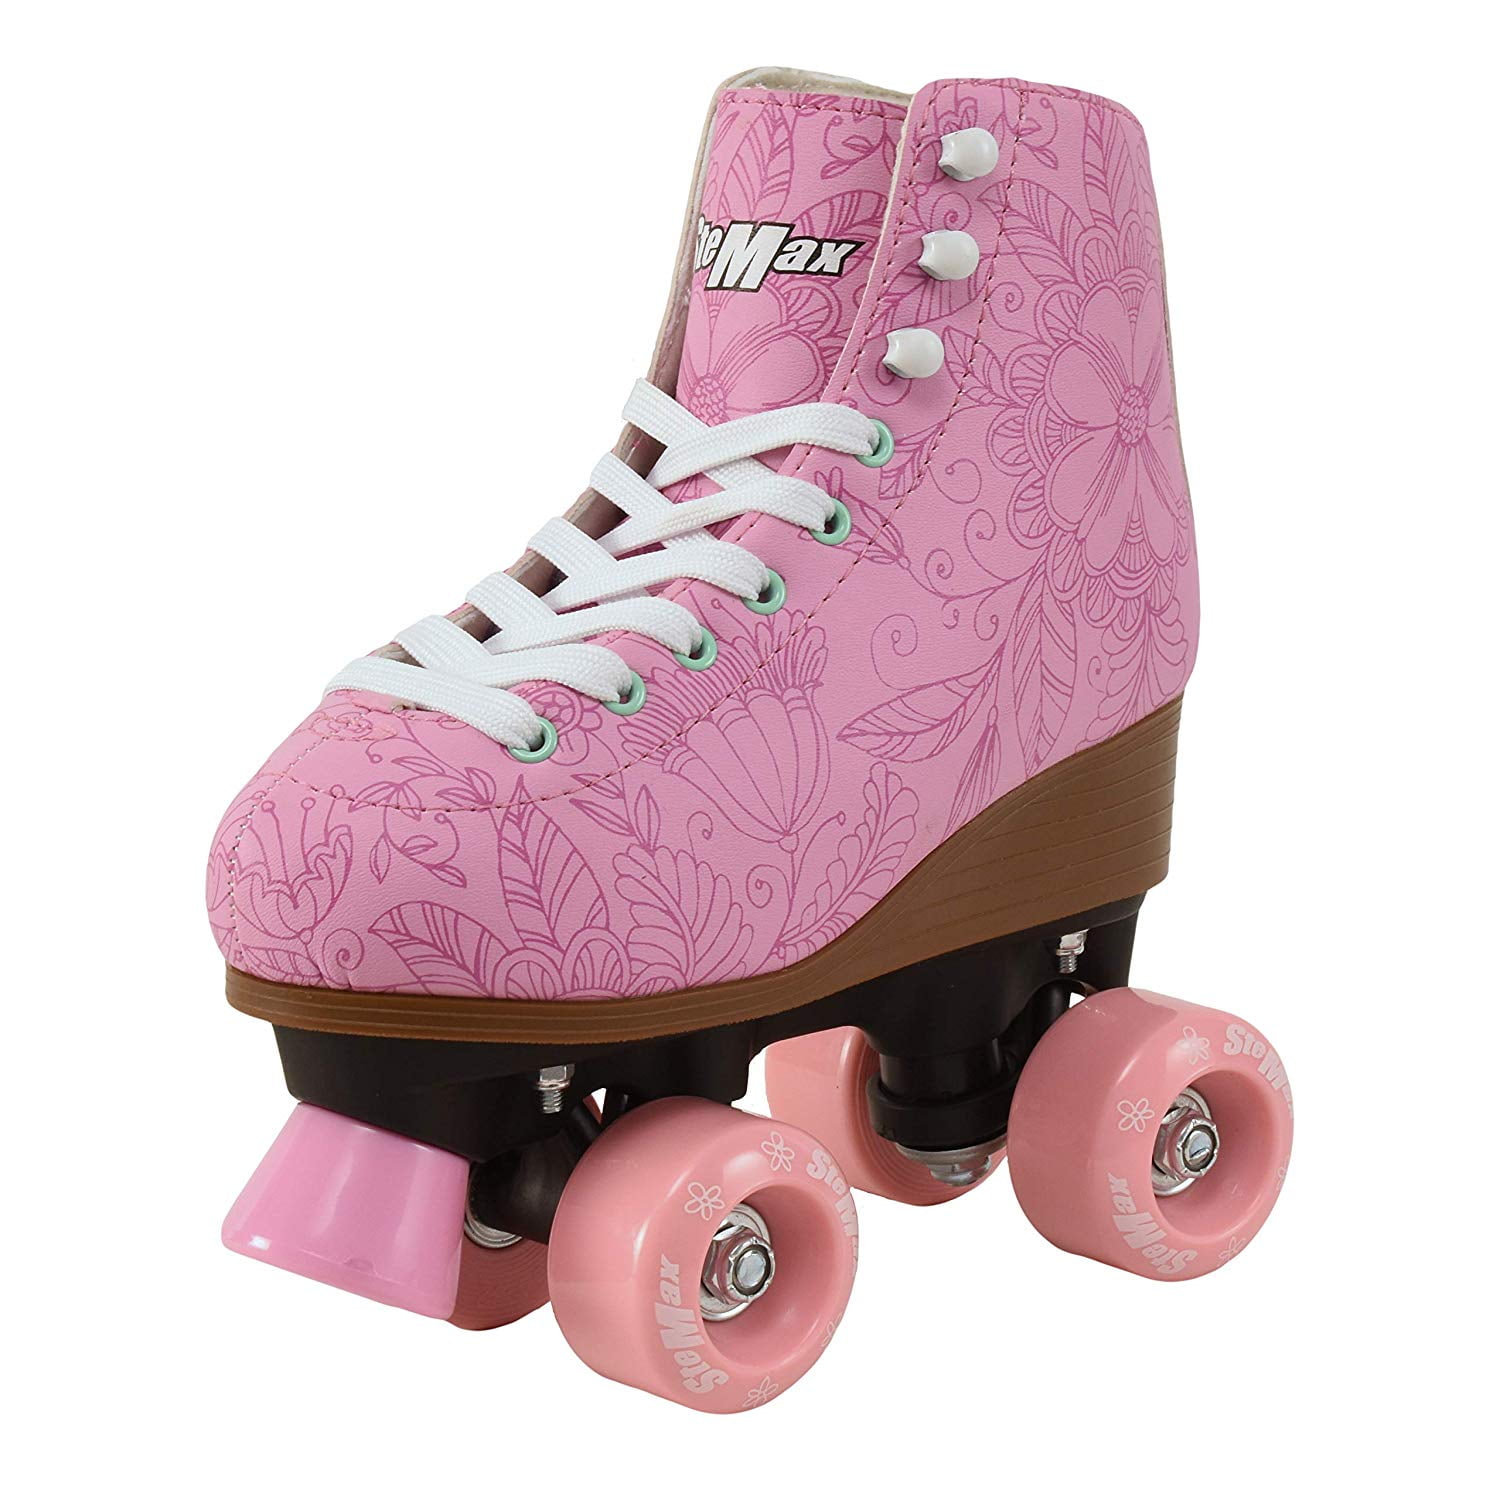 Roller Skates Women Size 6 Black  & Pink H\eel to toe   9  3/16in 